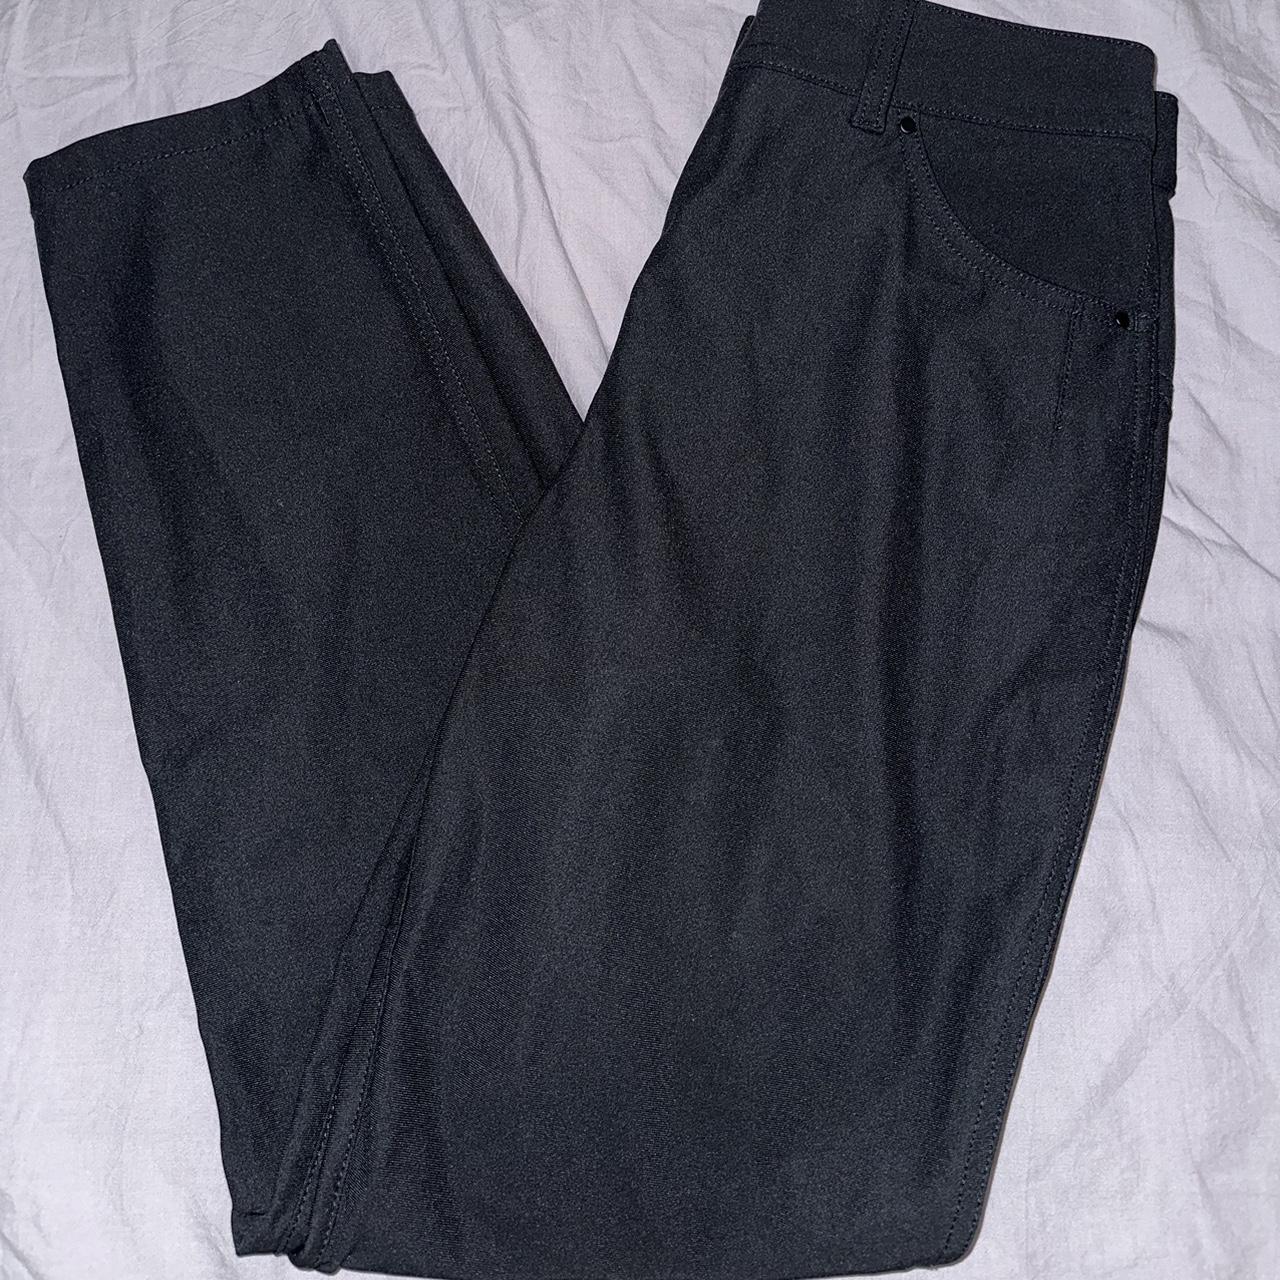 Lululemon city sleek pants - black size 6 (i'm a - Depop